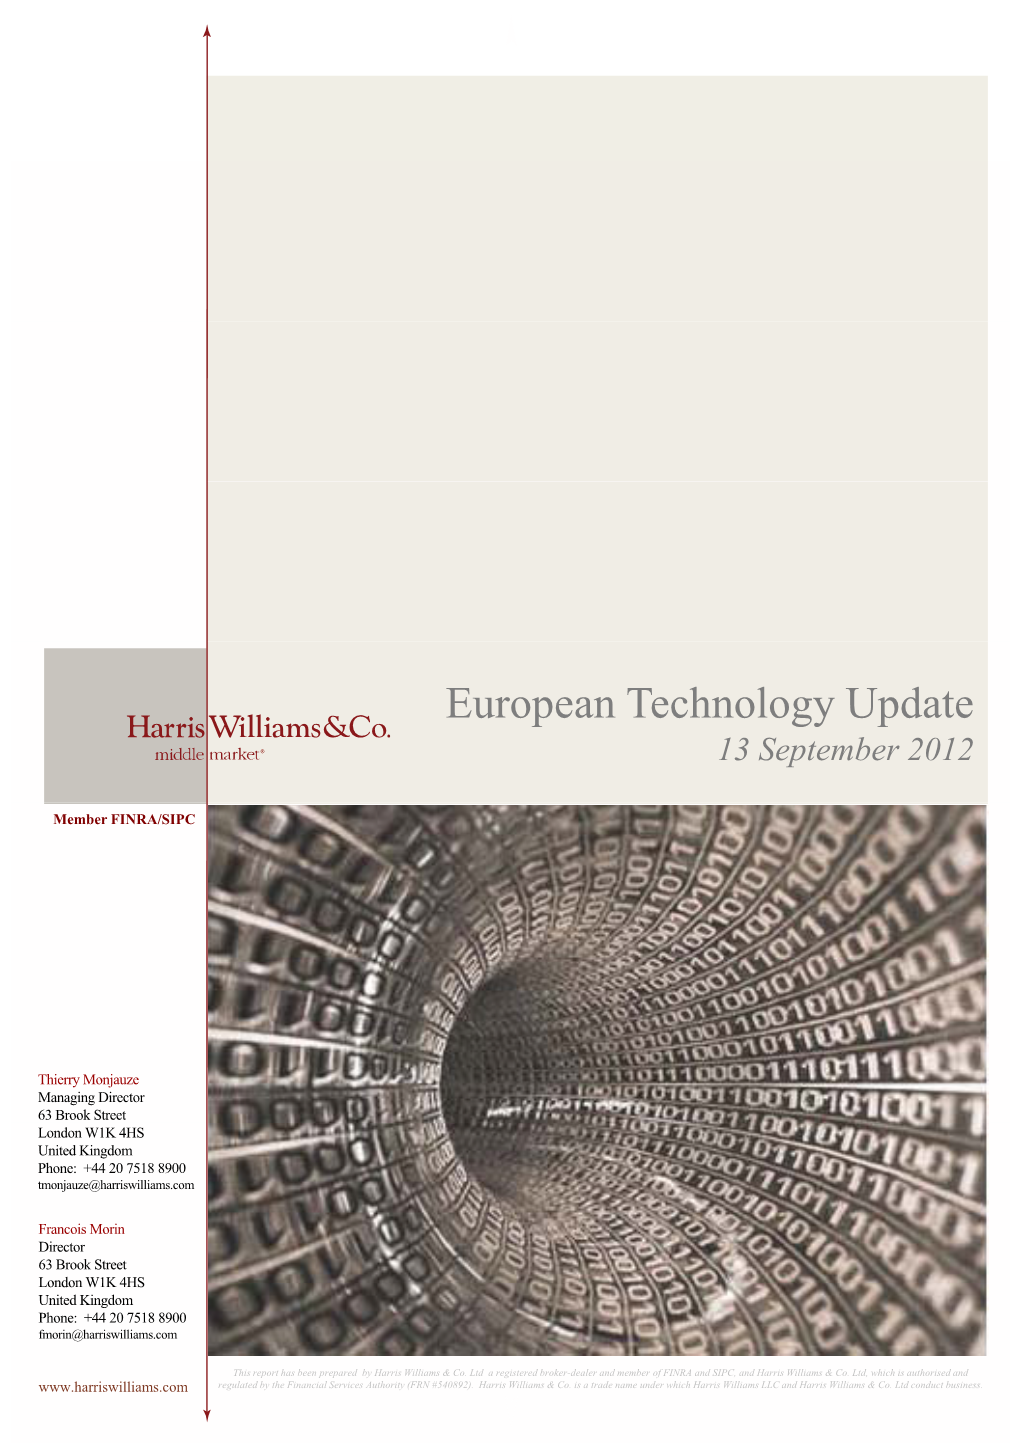 European Technology Update 13 September 2012